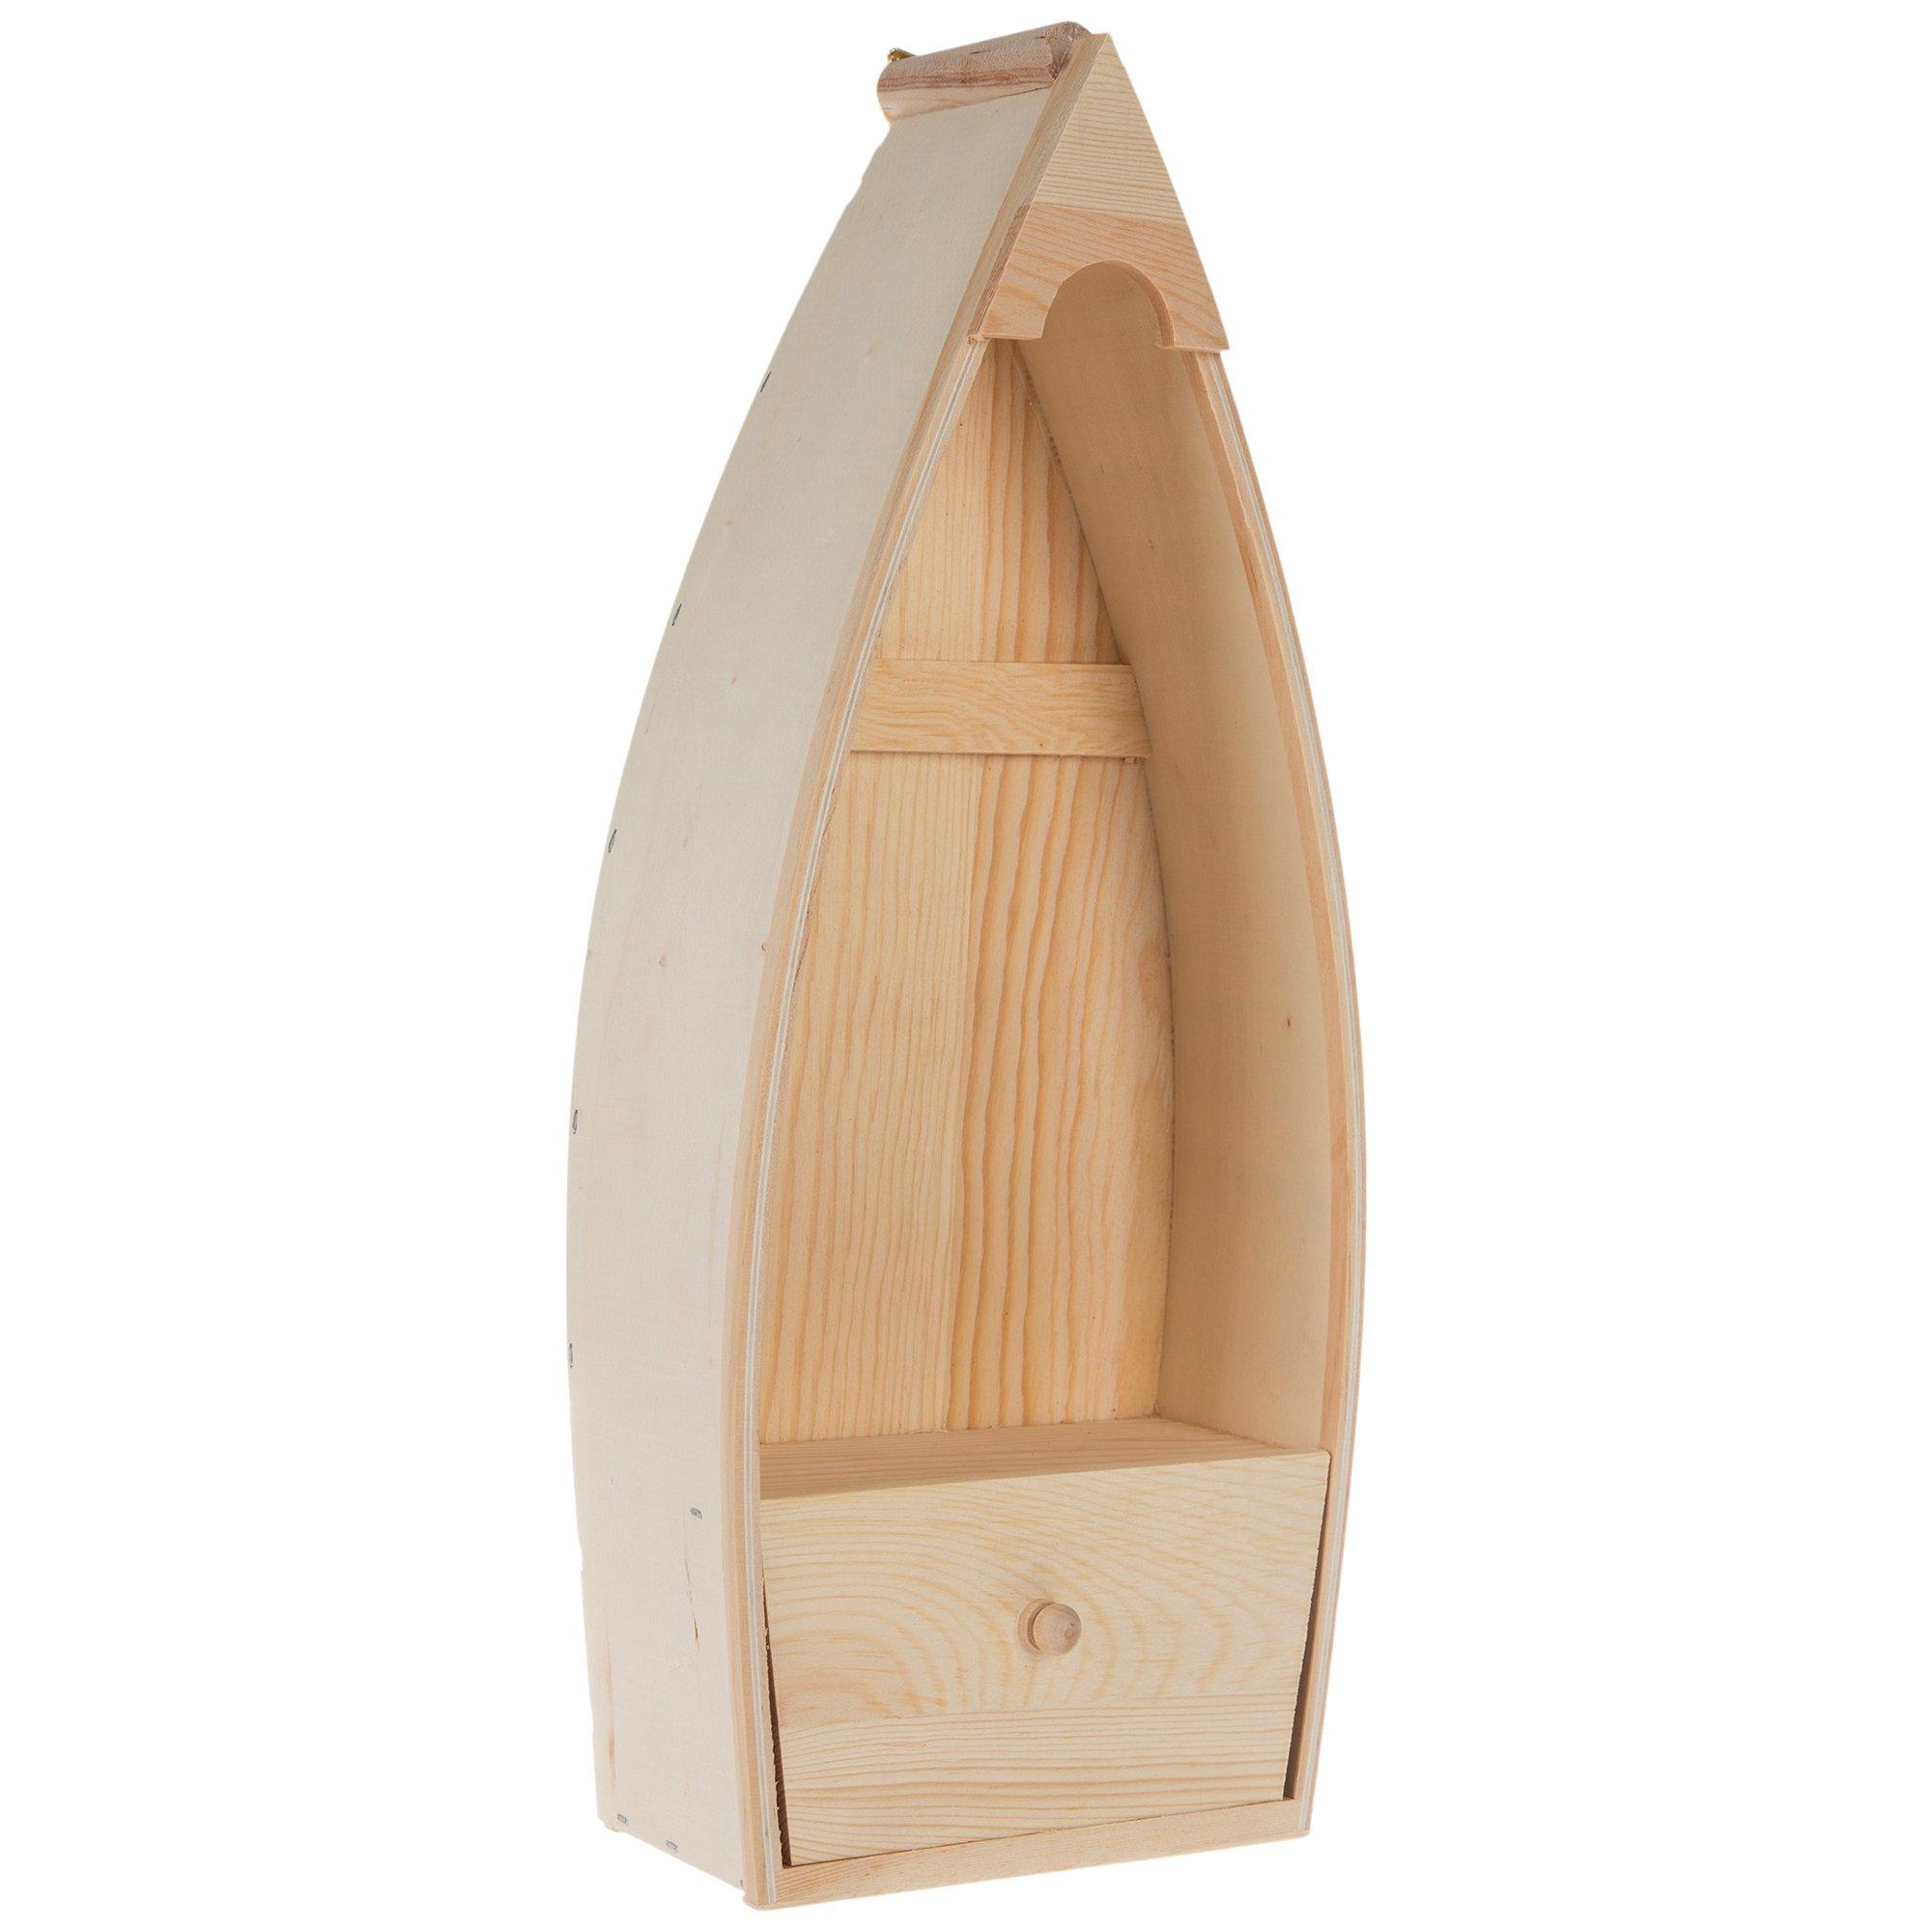 Boat wall shelf - replica rowboat shape - wood - 2´11.5 (90cm)